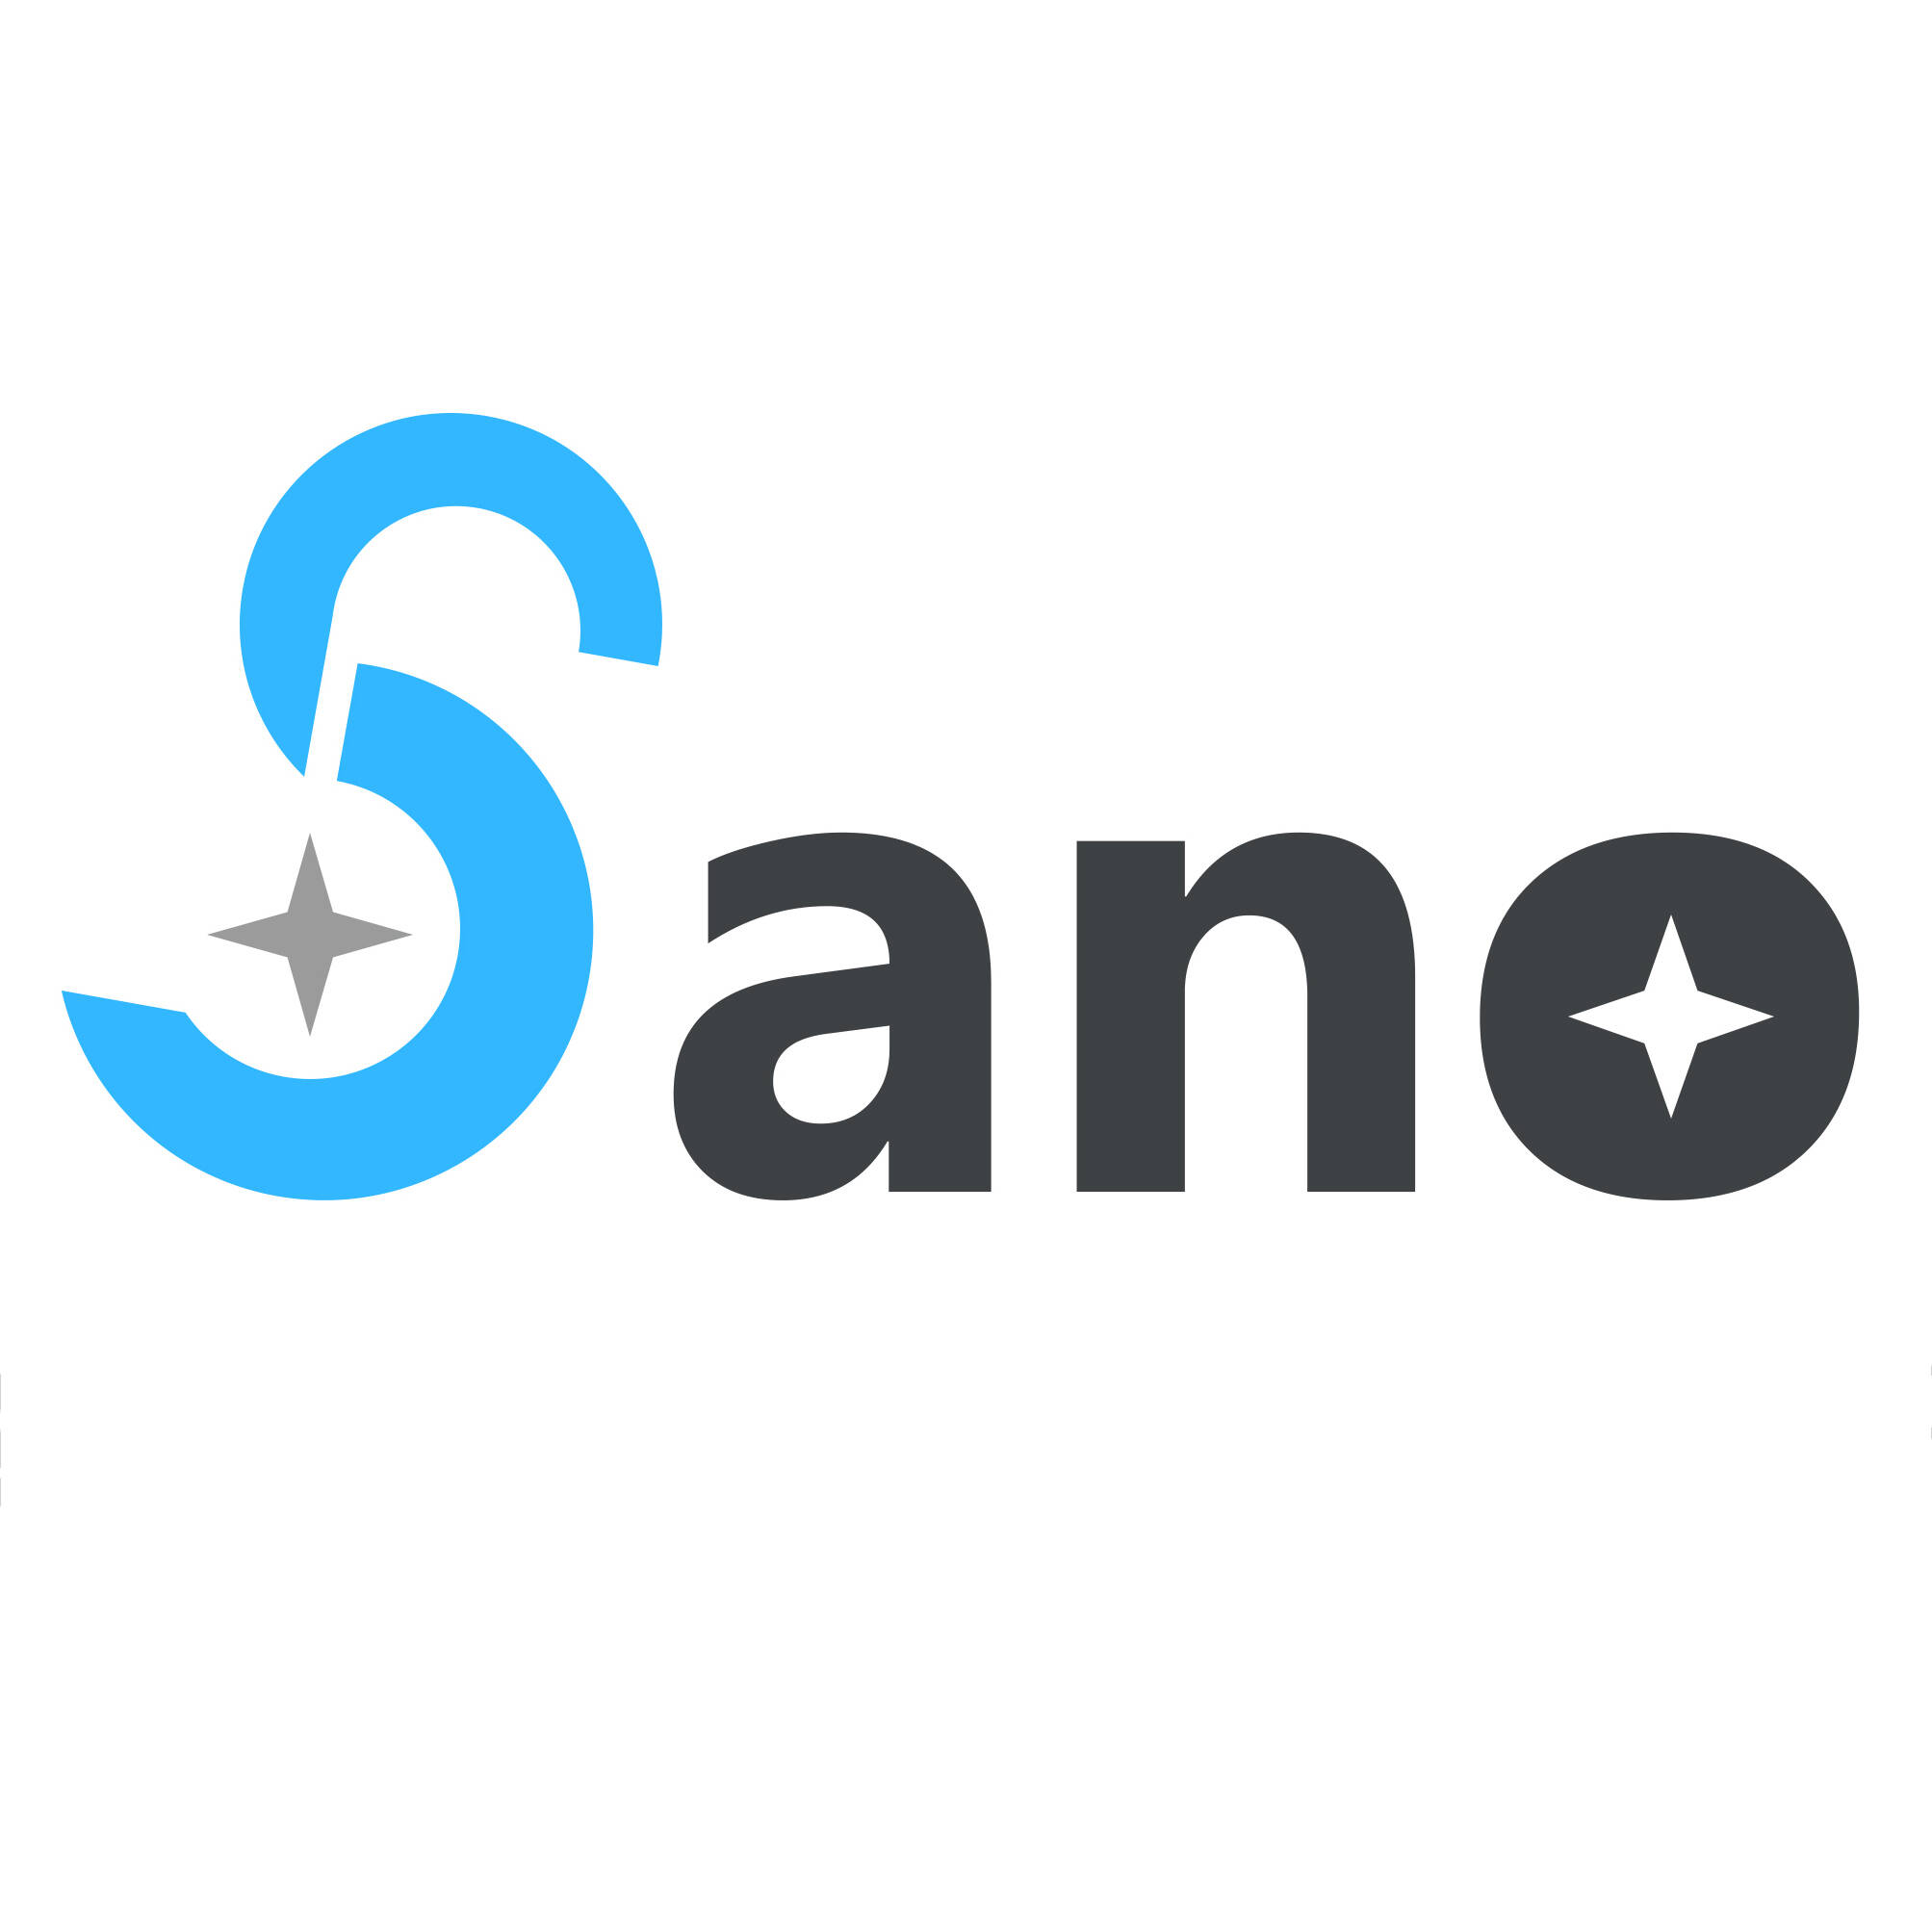 Sano logo (2) - 副本.jpg